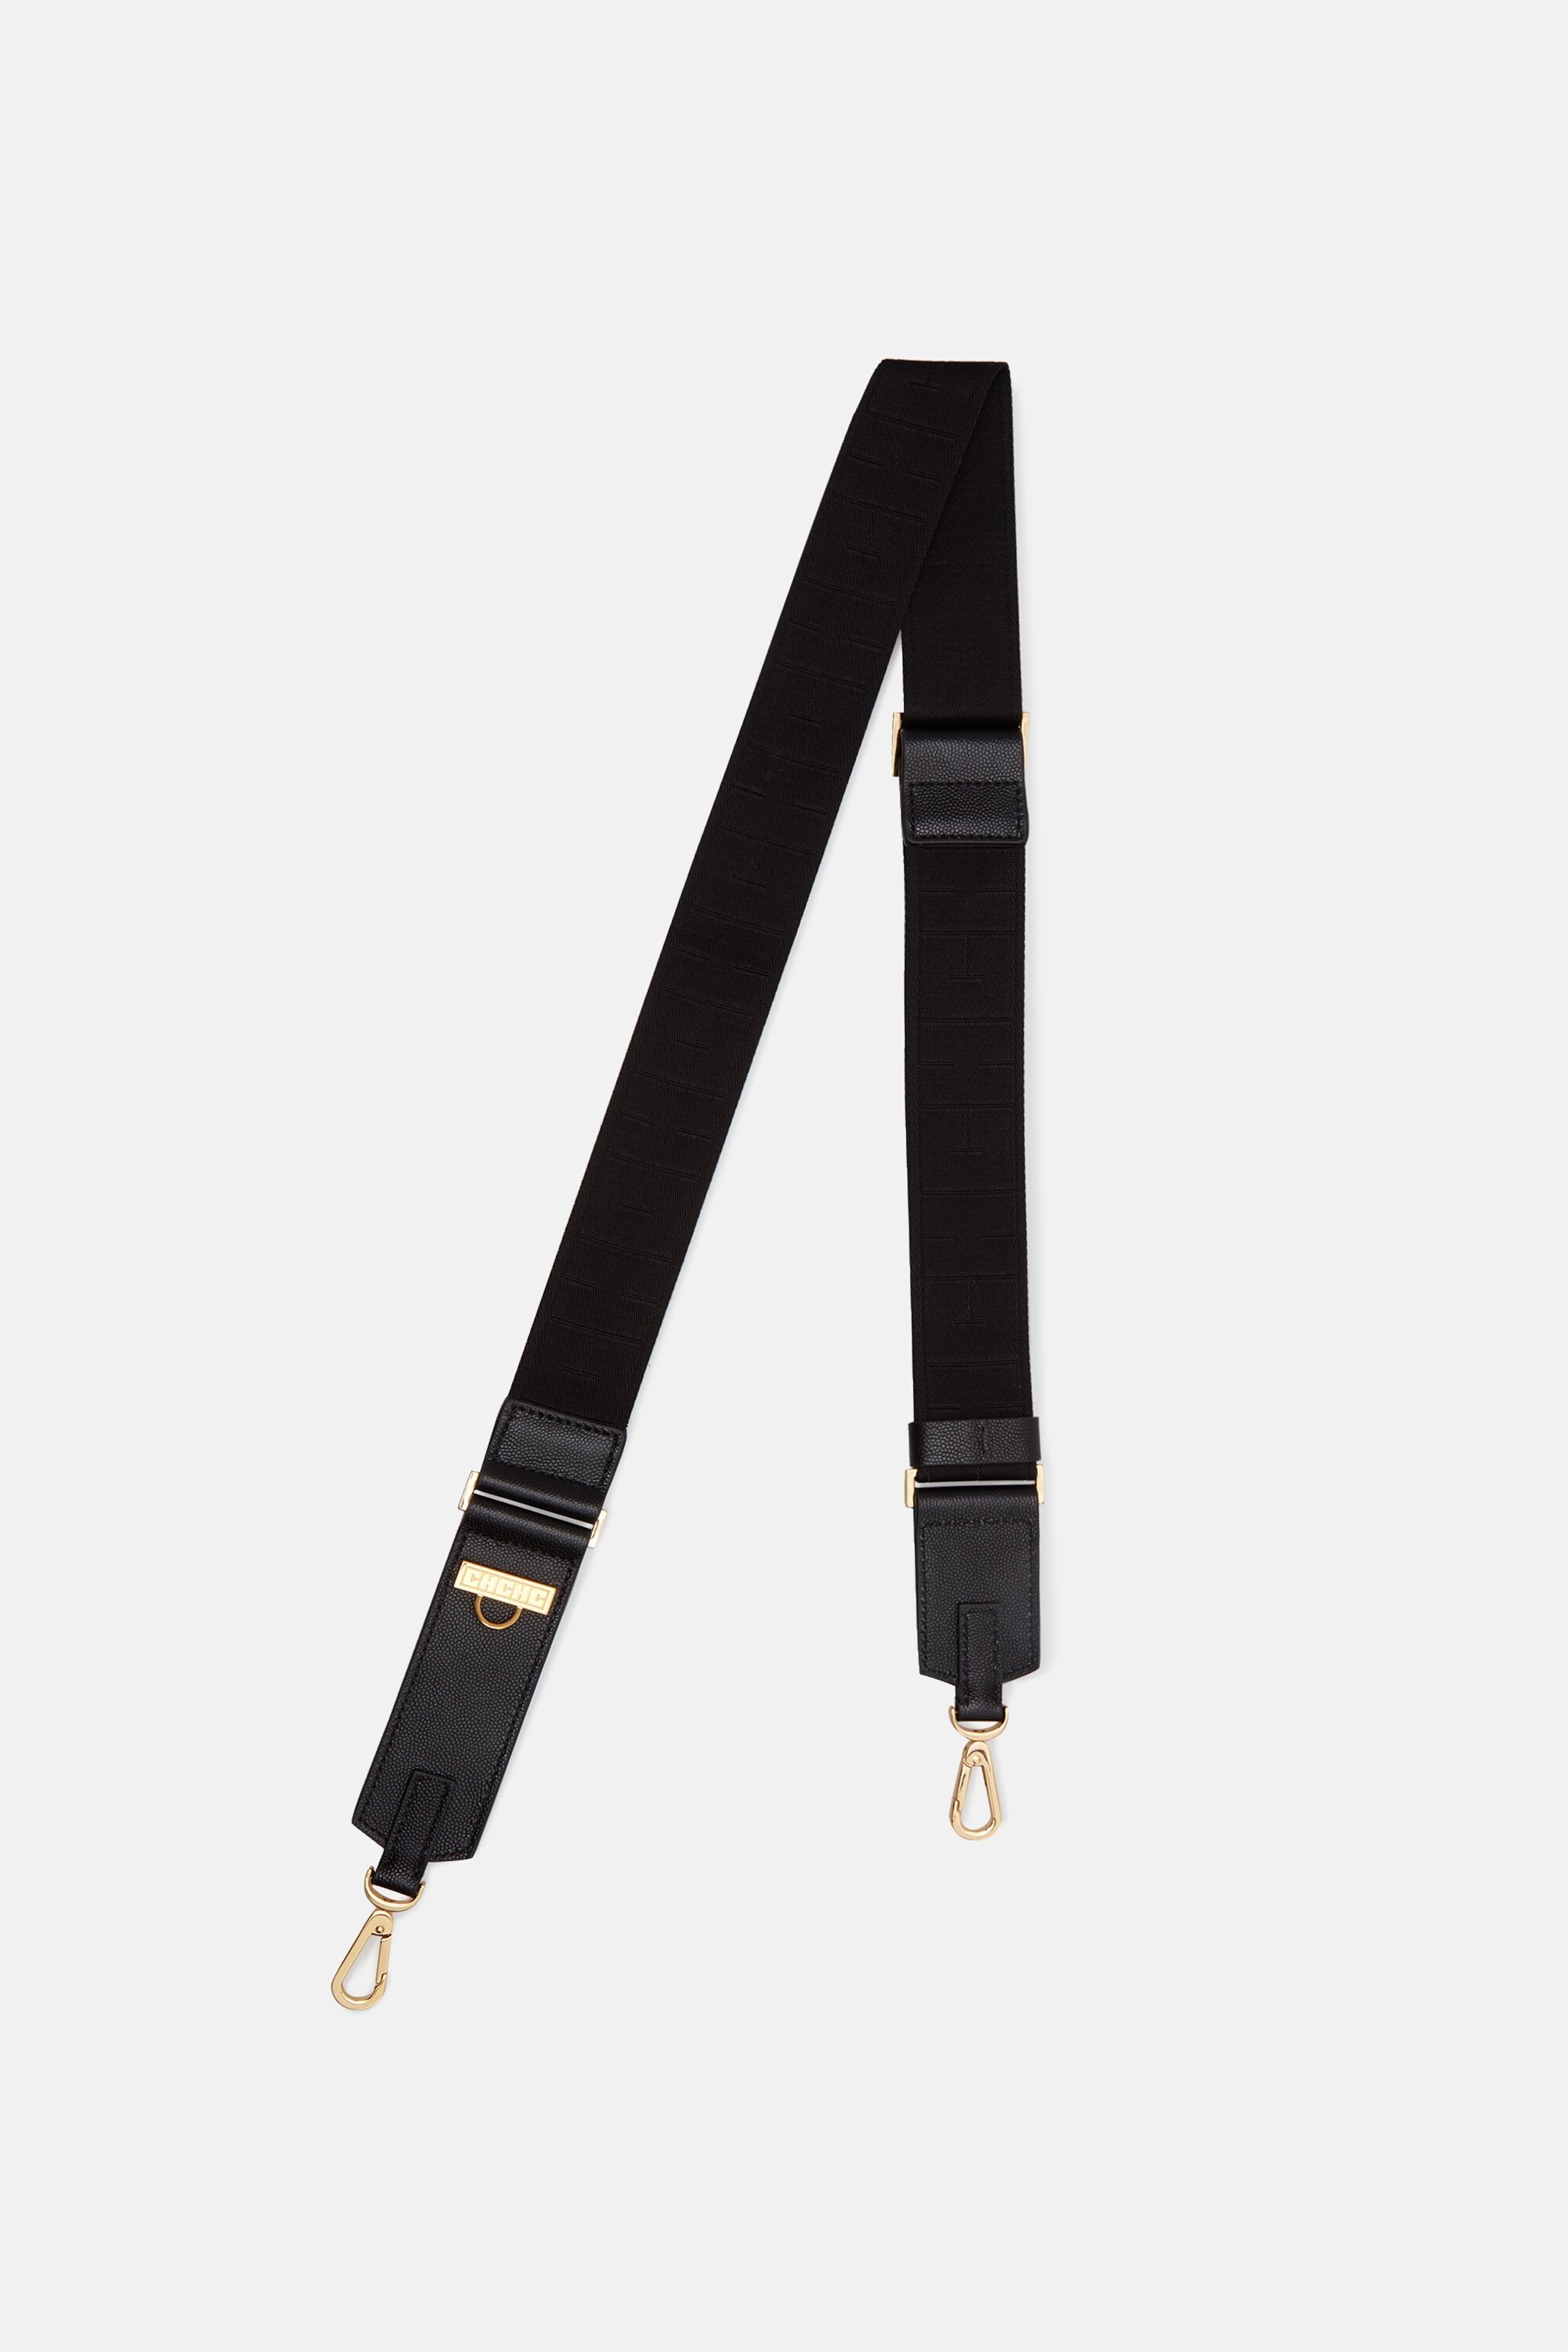 Bimba  Adjustable leather and grosgrain crossbody strap black - CH  Carolina Herrera United States